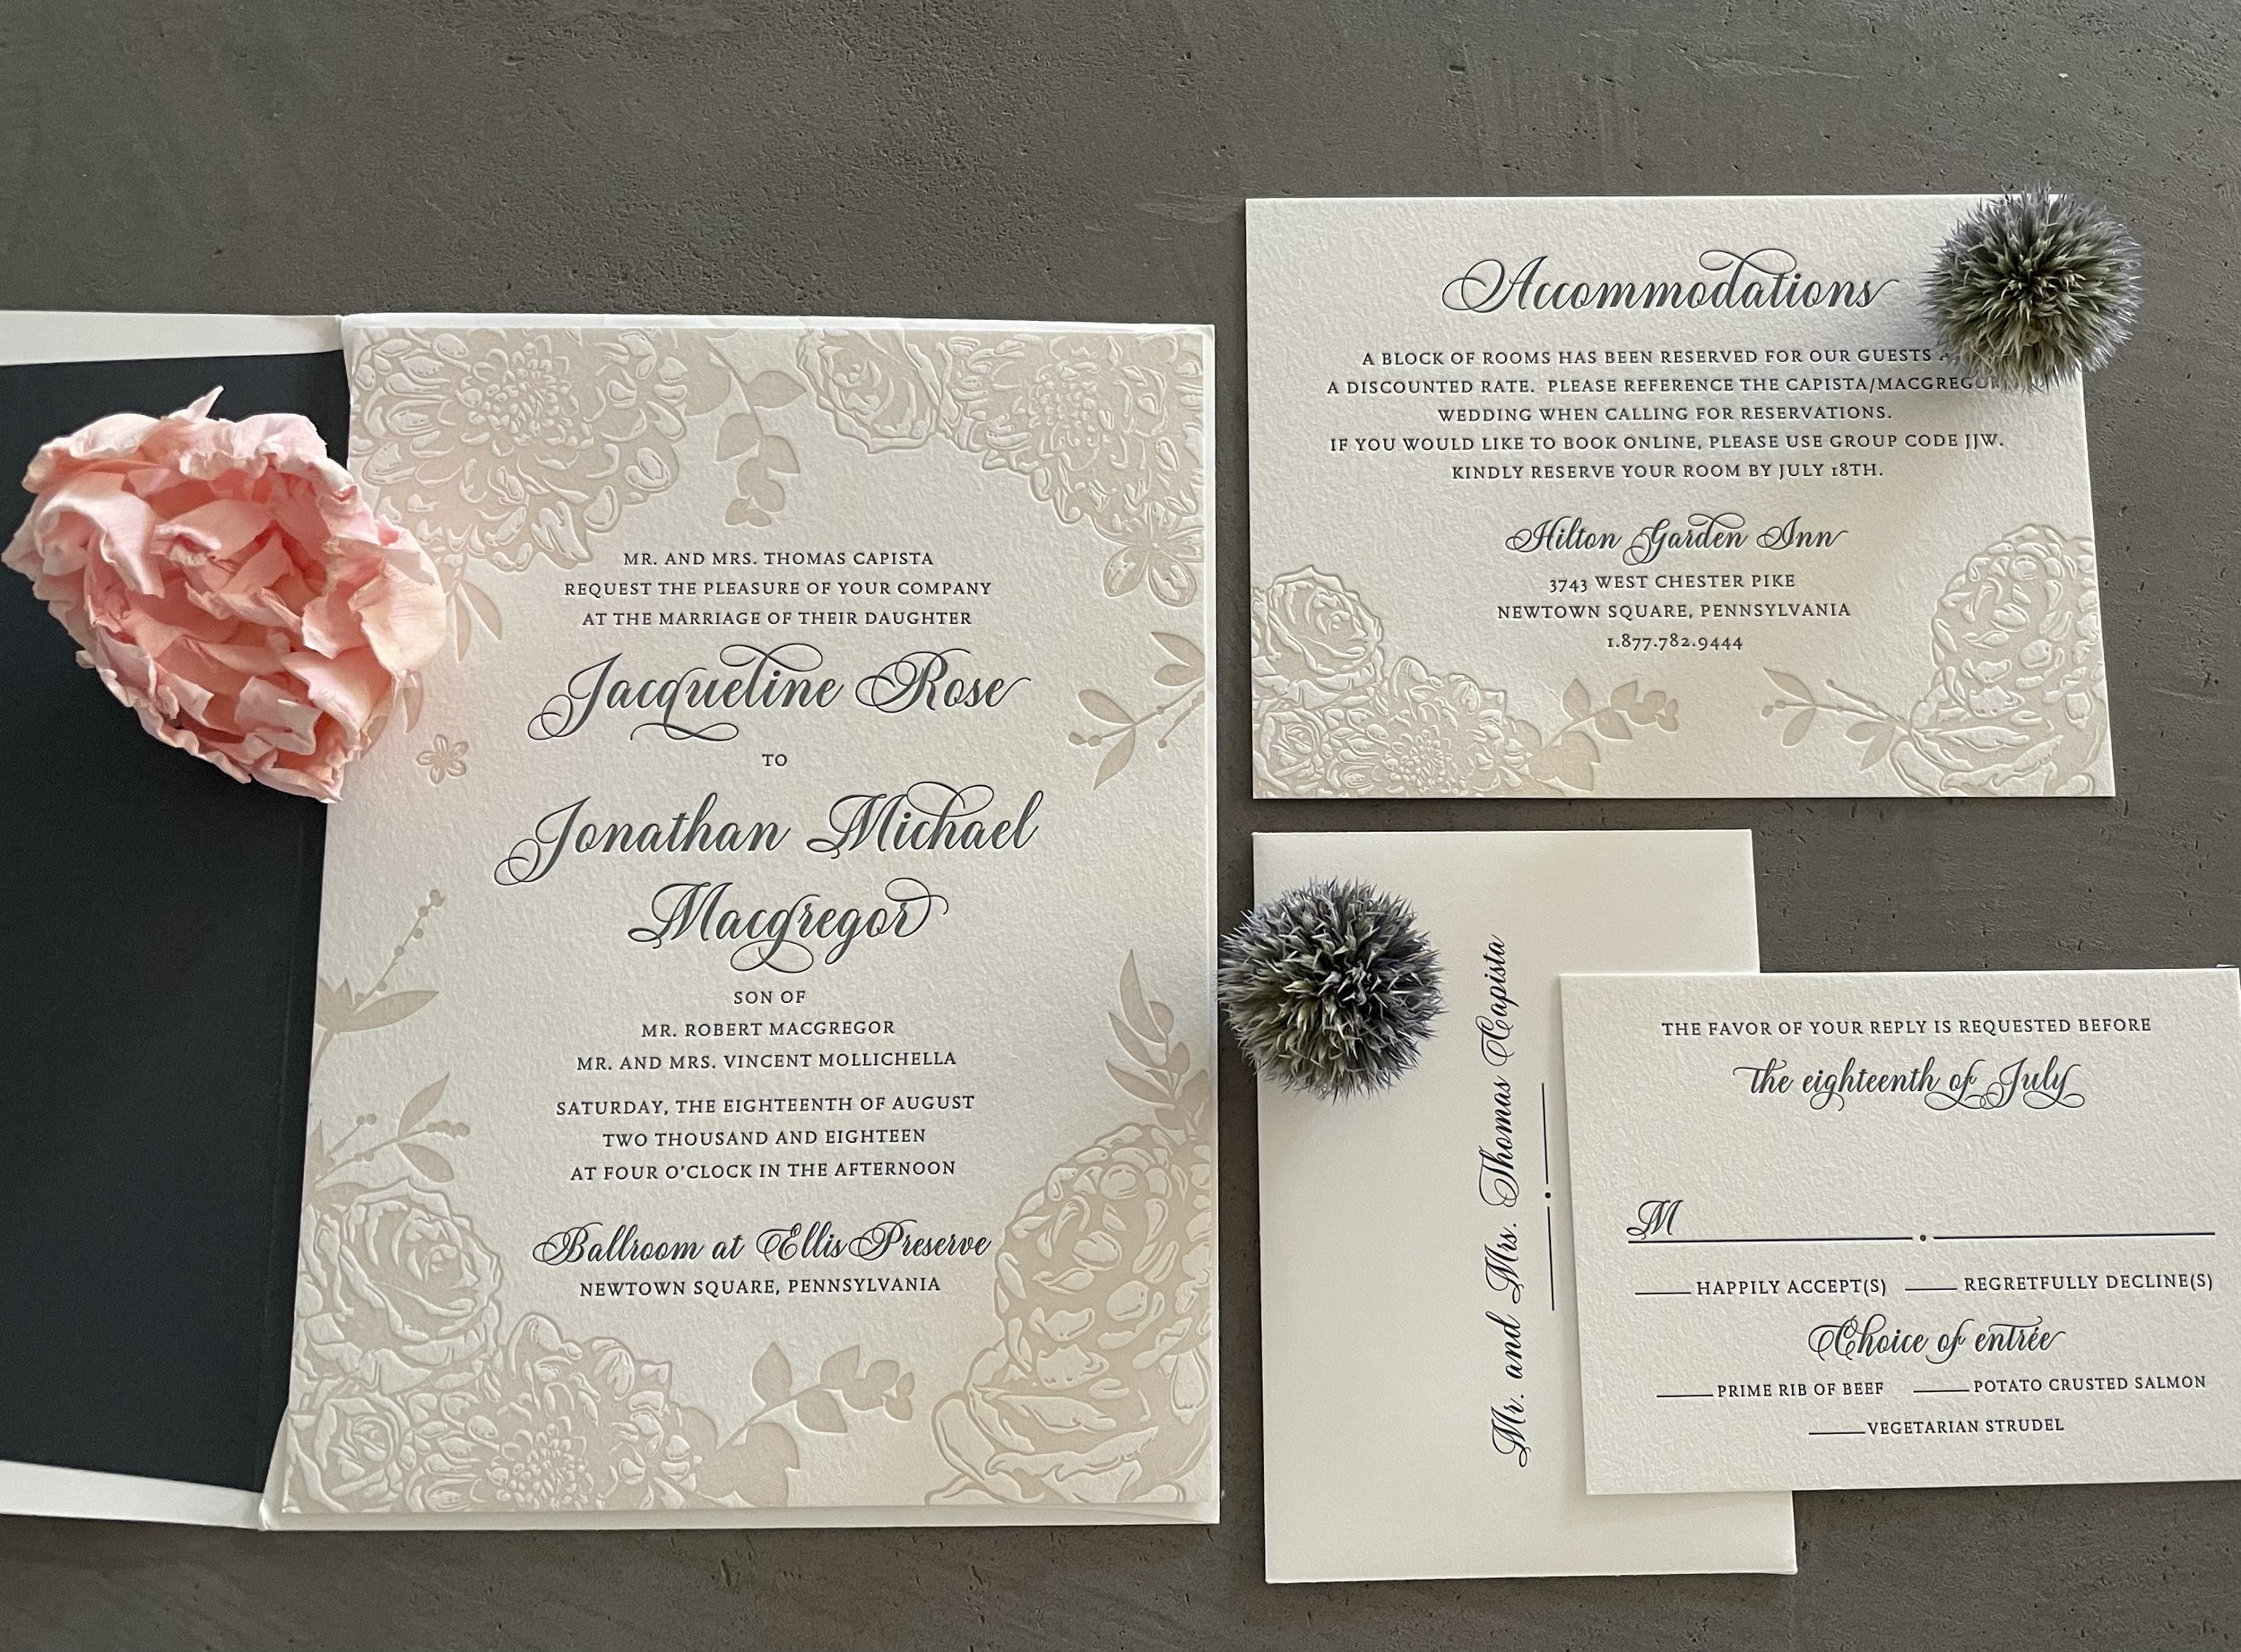 Jacqueline and Jonathan's Wedding Invitation